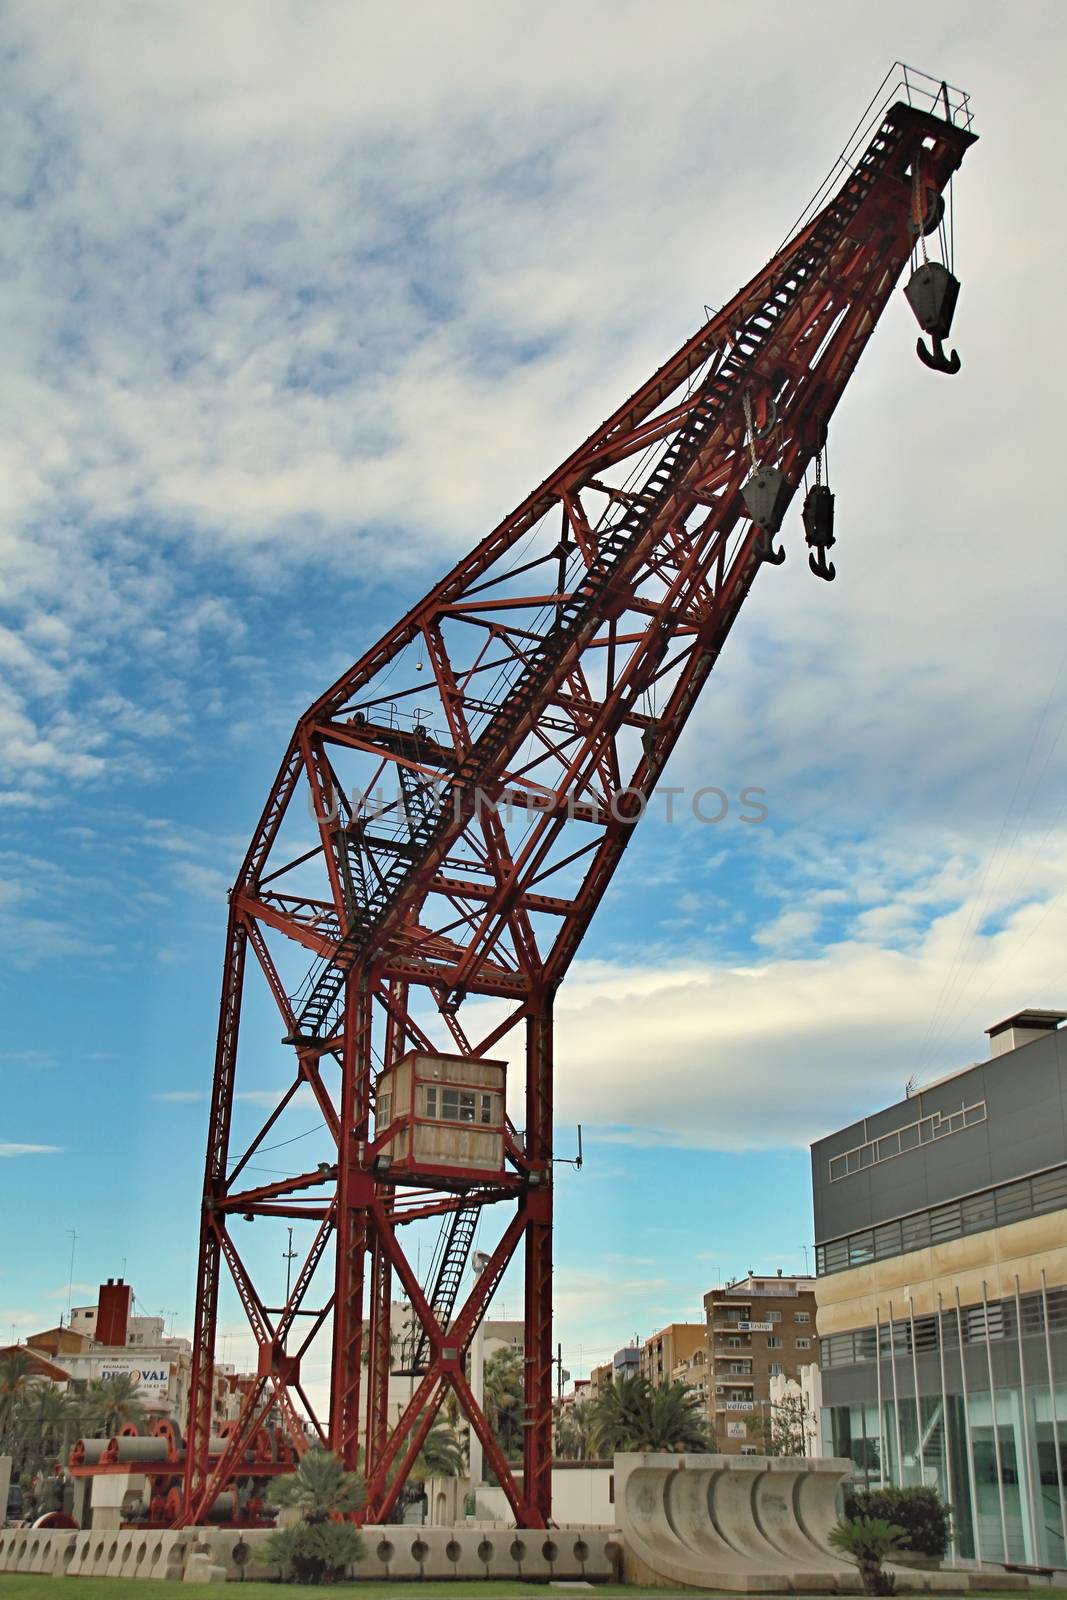 City Seaport Crane by Dermot68